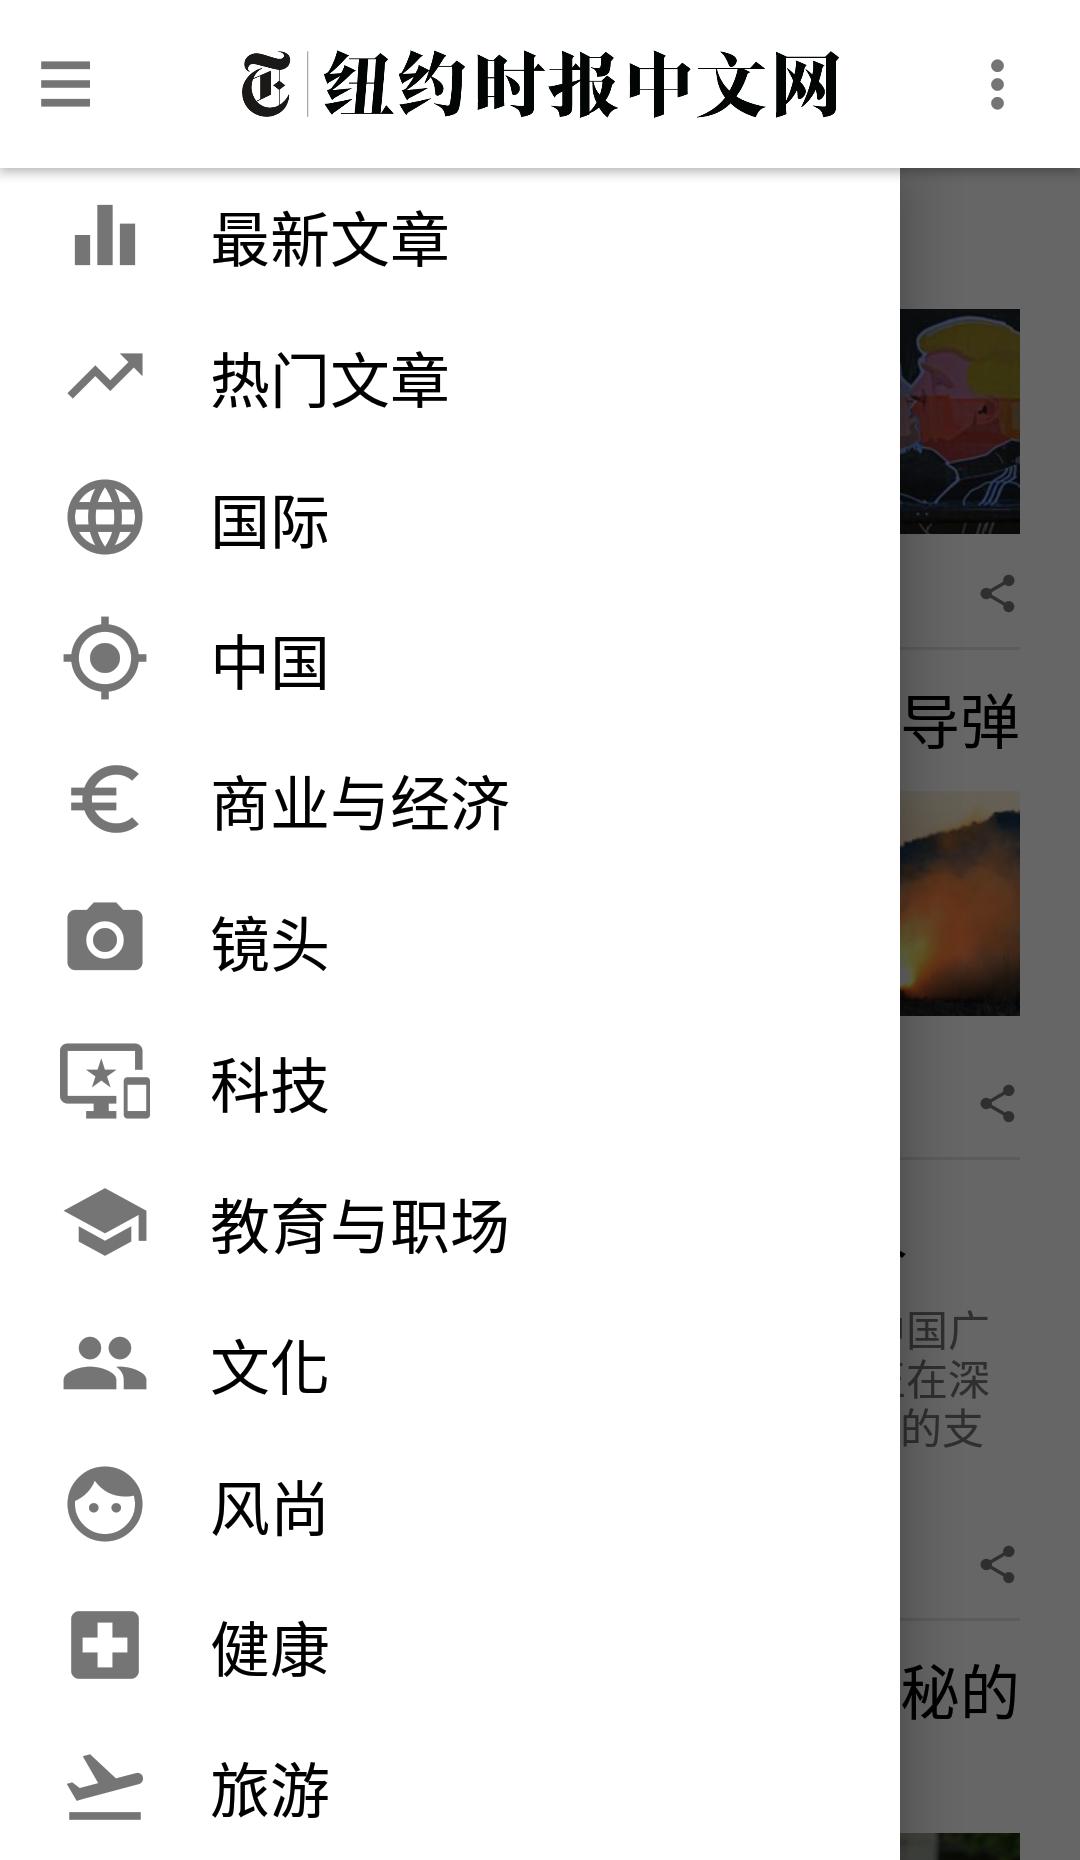 NYTimes - Chinese Edition 1.1.0.29 Screenshot 8